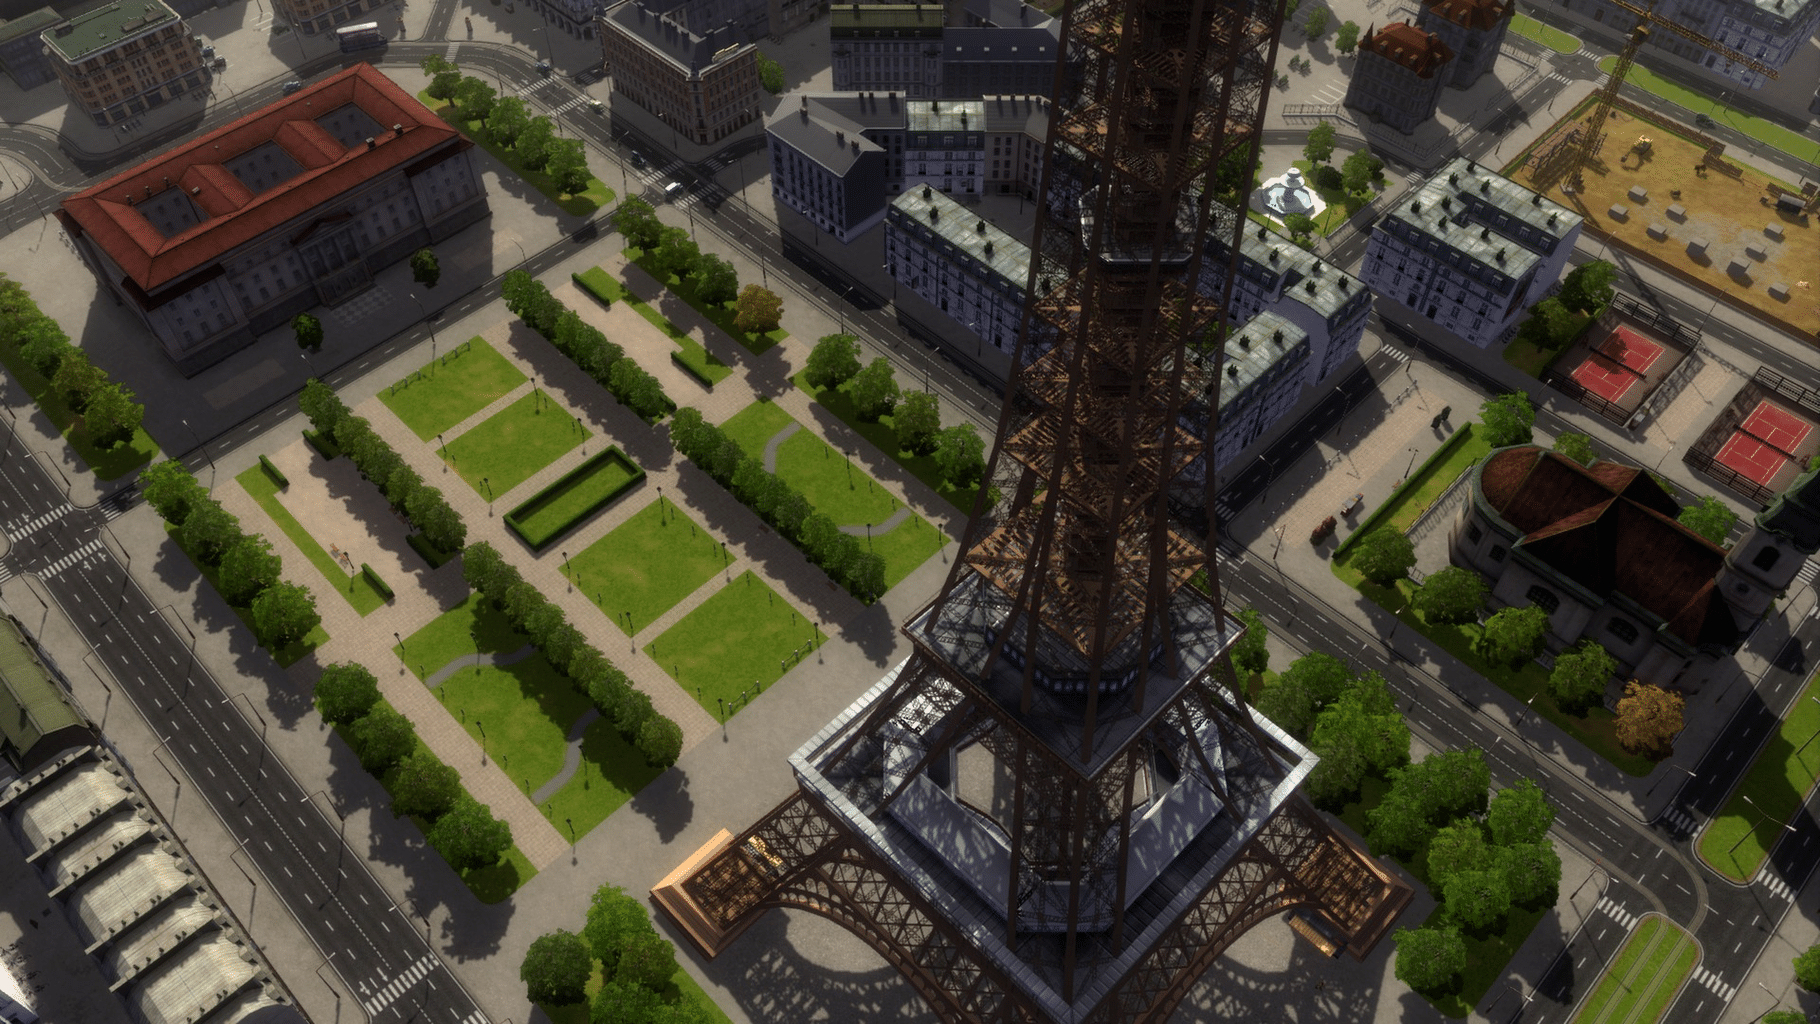 Cities in Motion: Paris screenshot